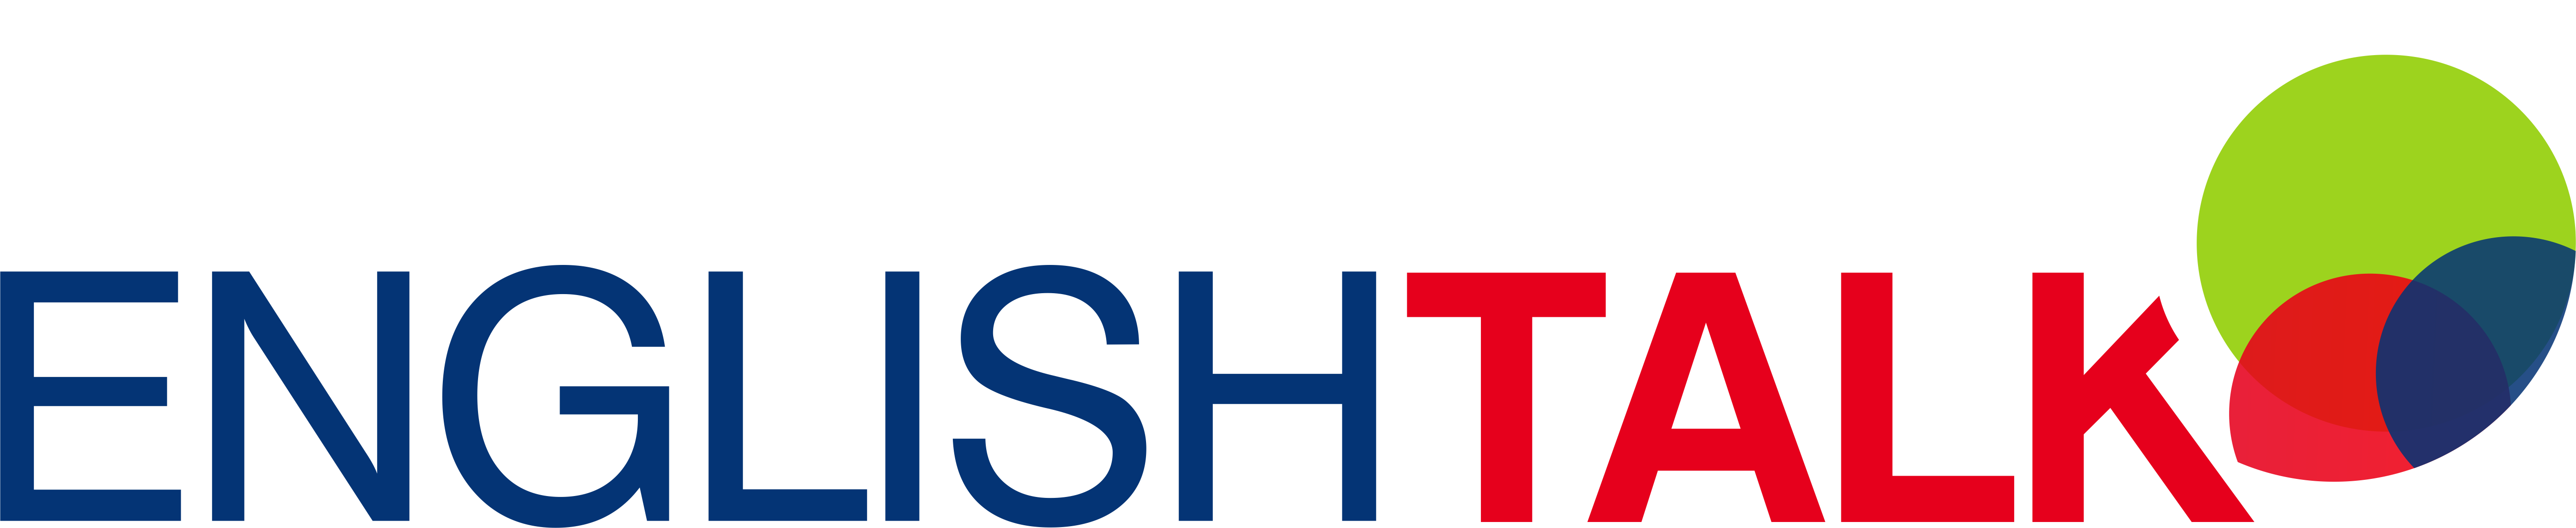 Imagem Logo Englishtalk